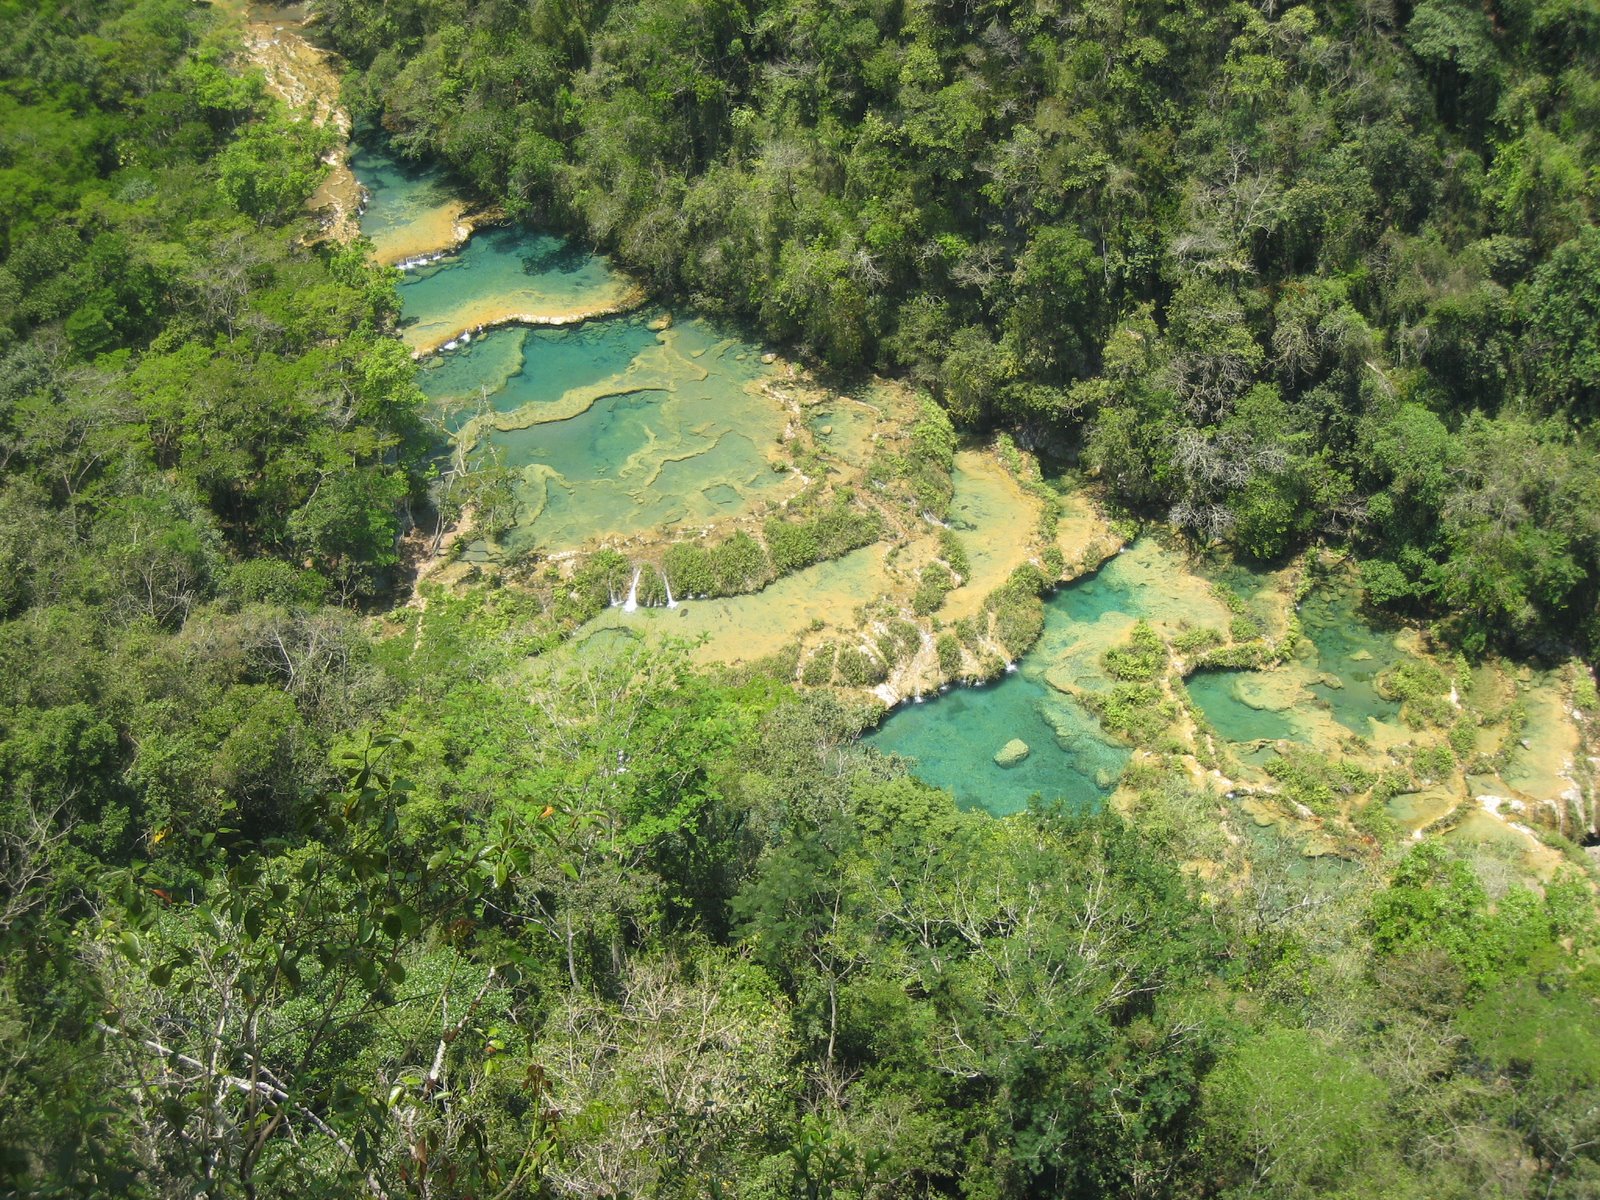 The natural pools of Semuc Champey, Guatemala